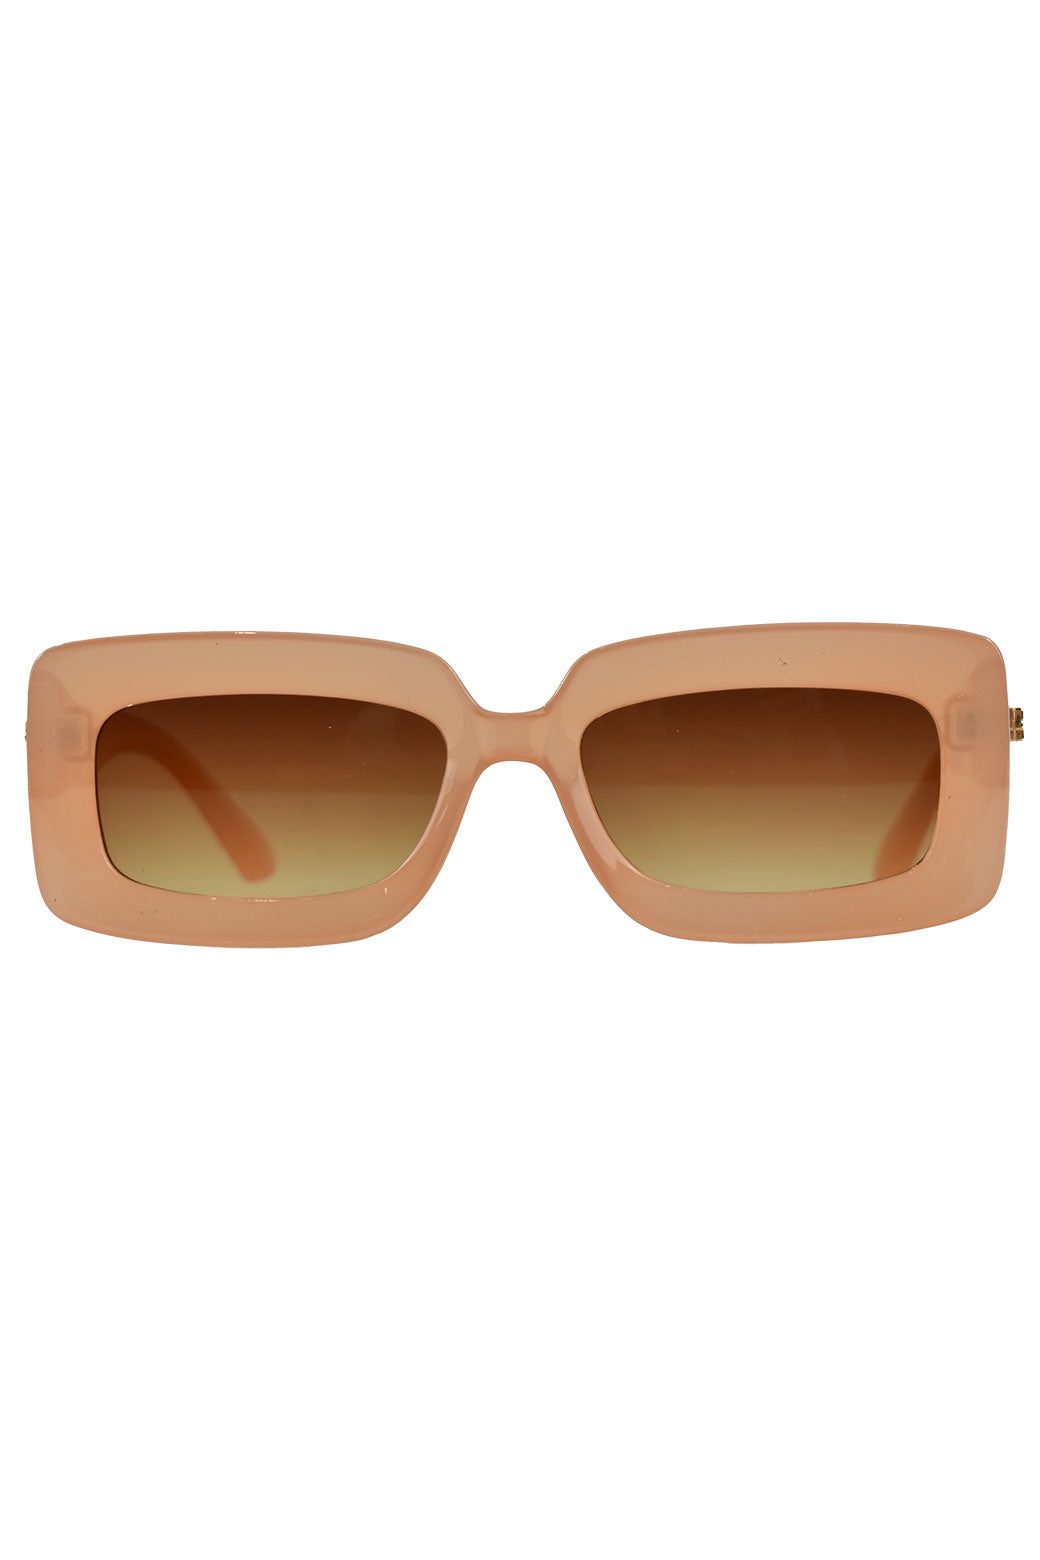 Peta + Jain Blurred Sunglasses Peach